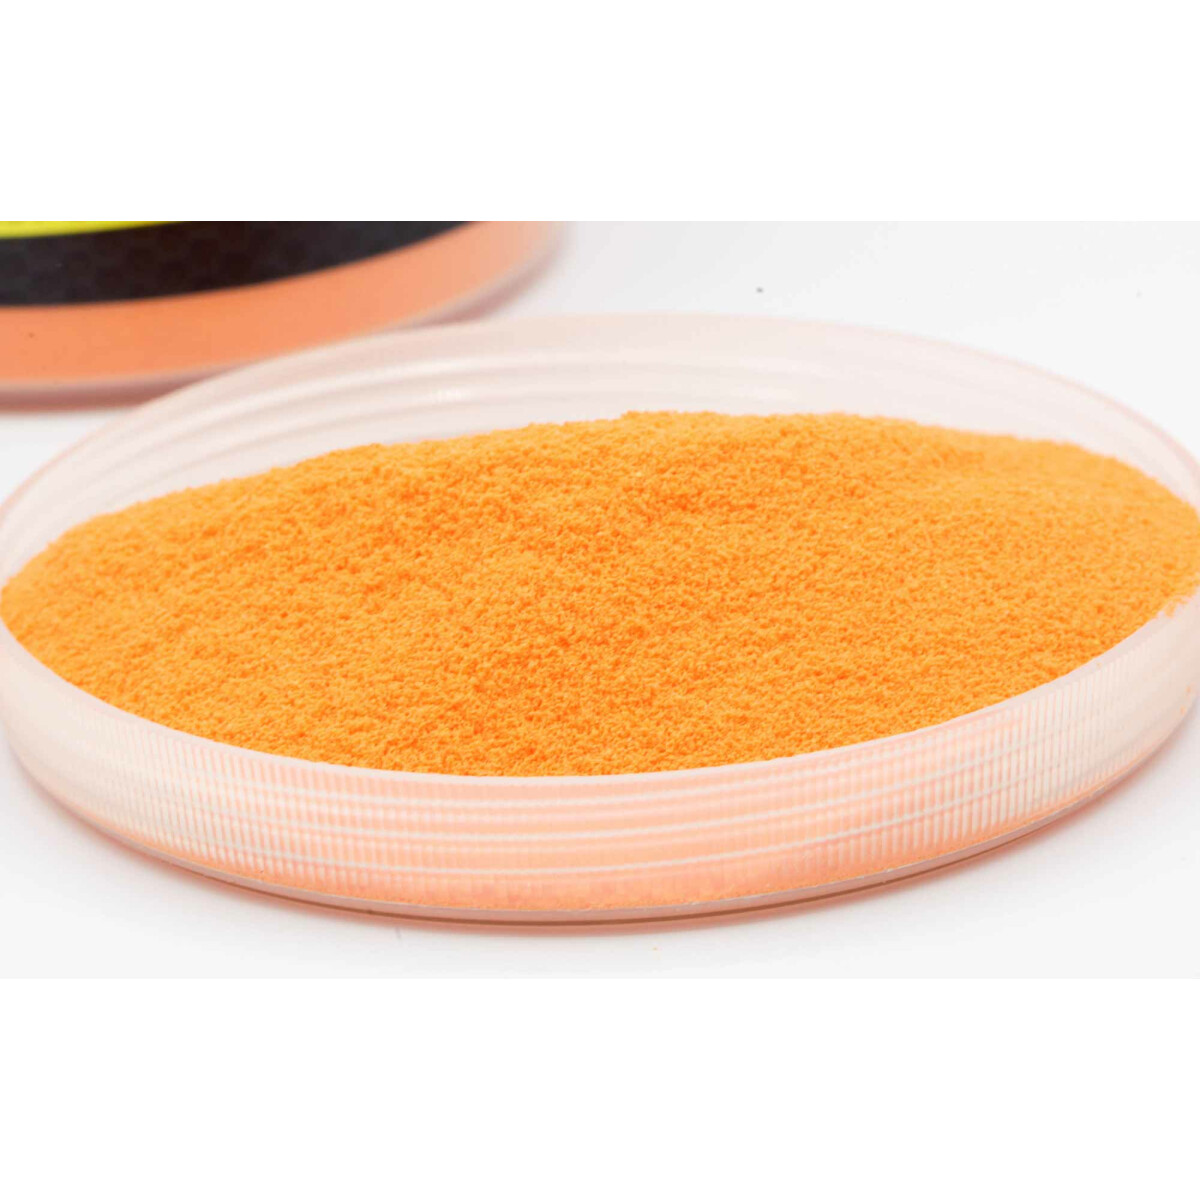 Carpleads Powder Coating - Orange